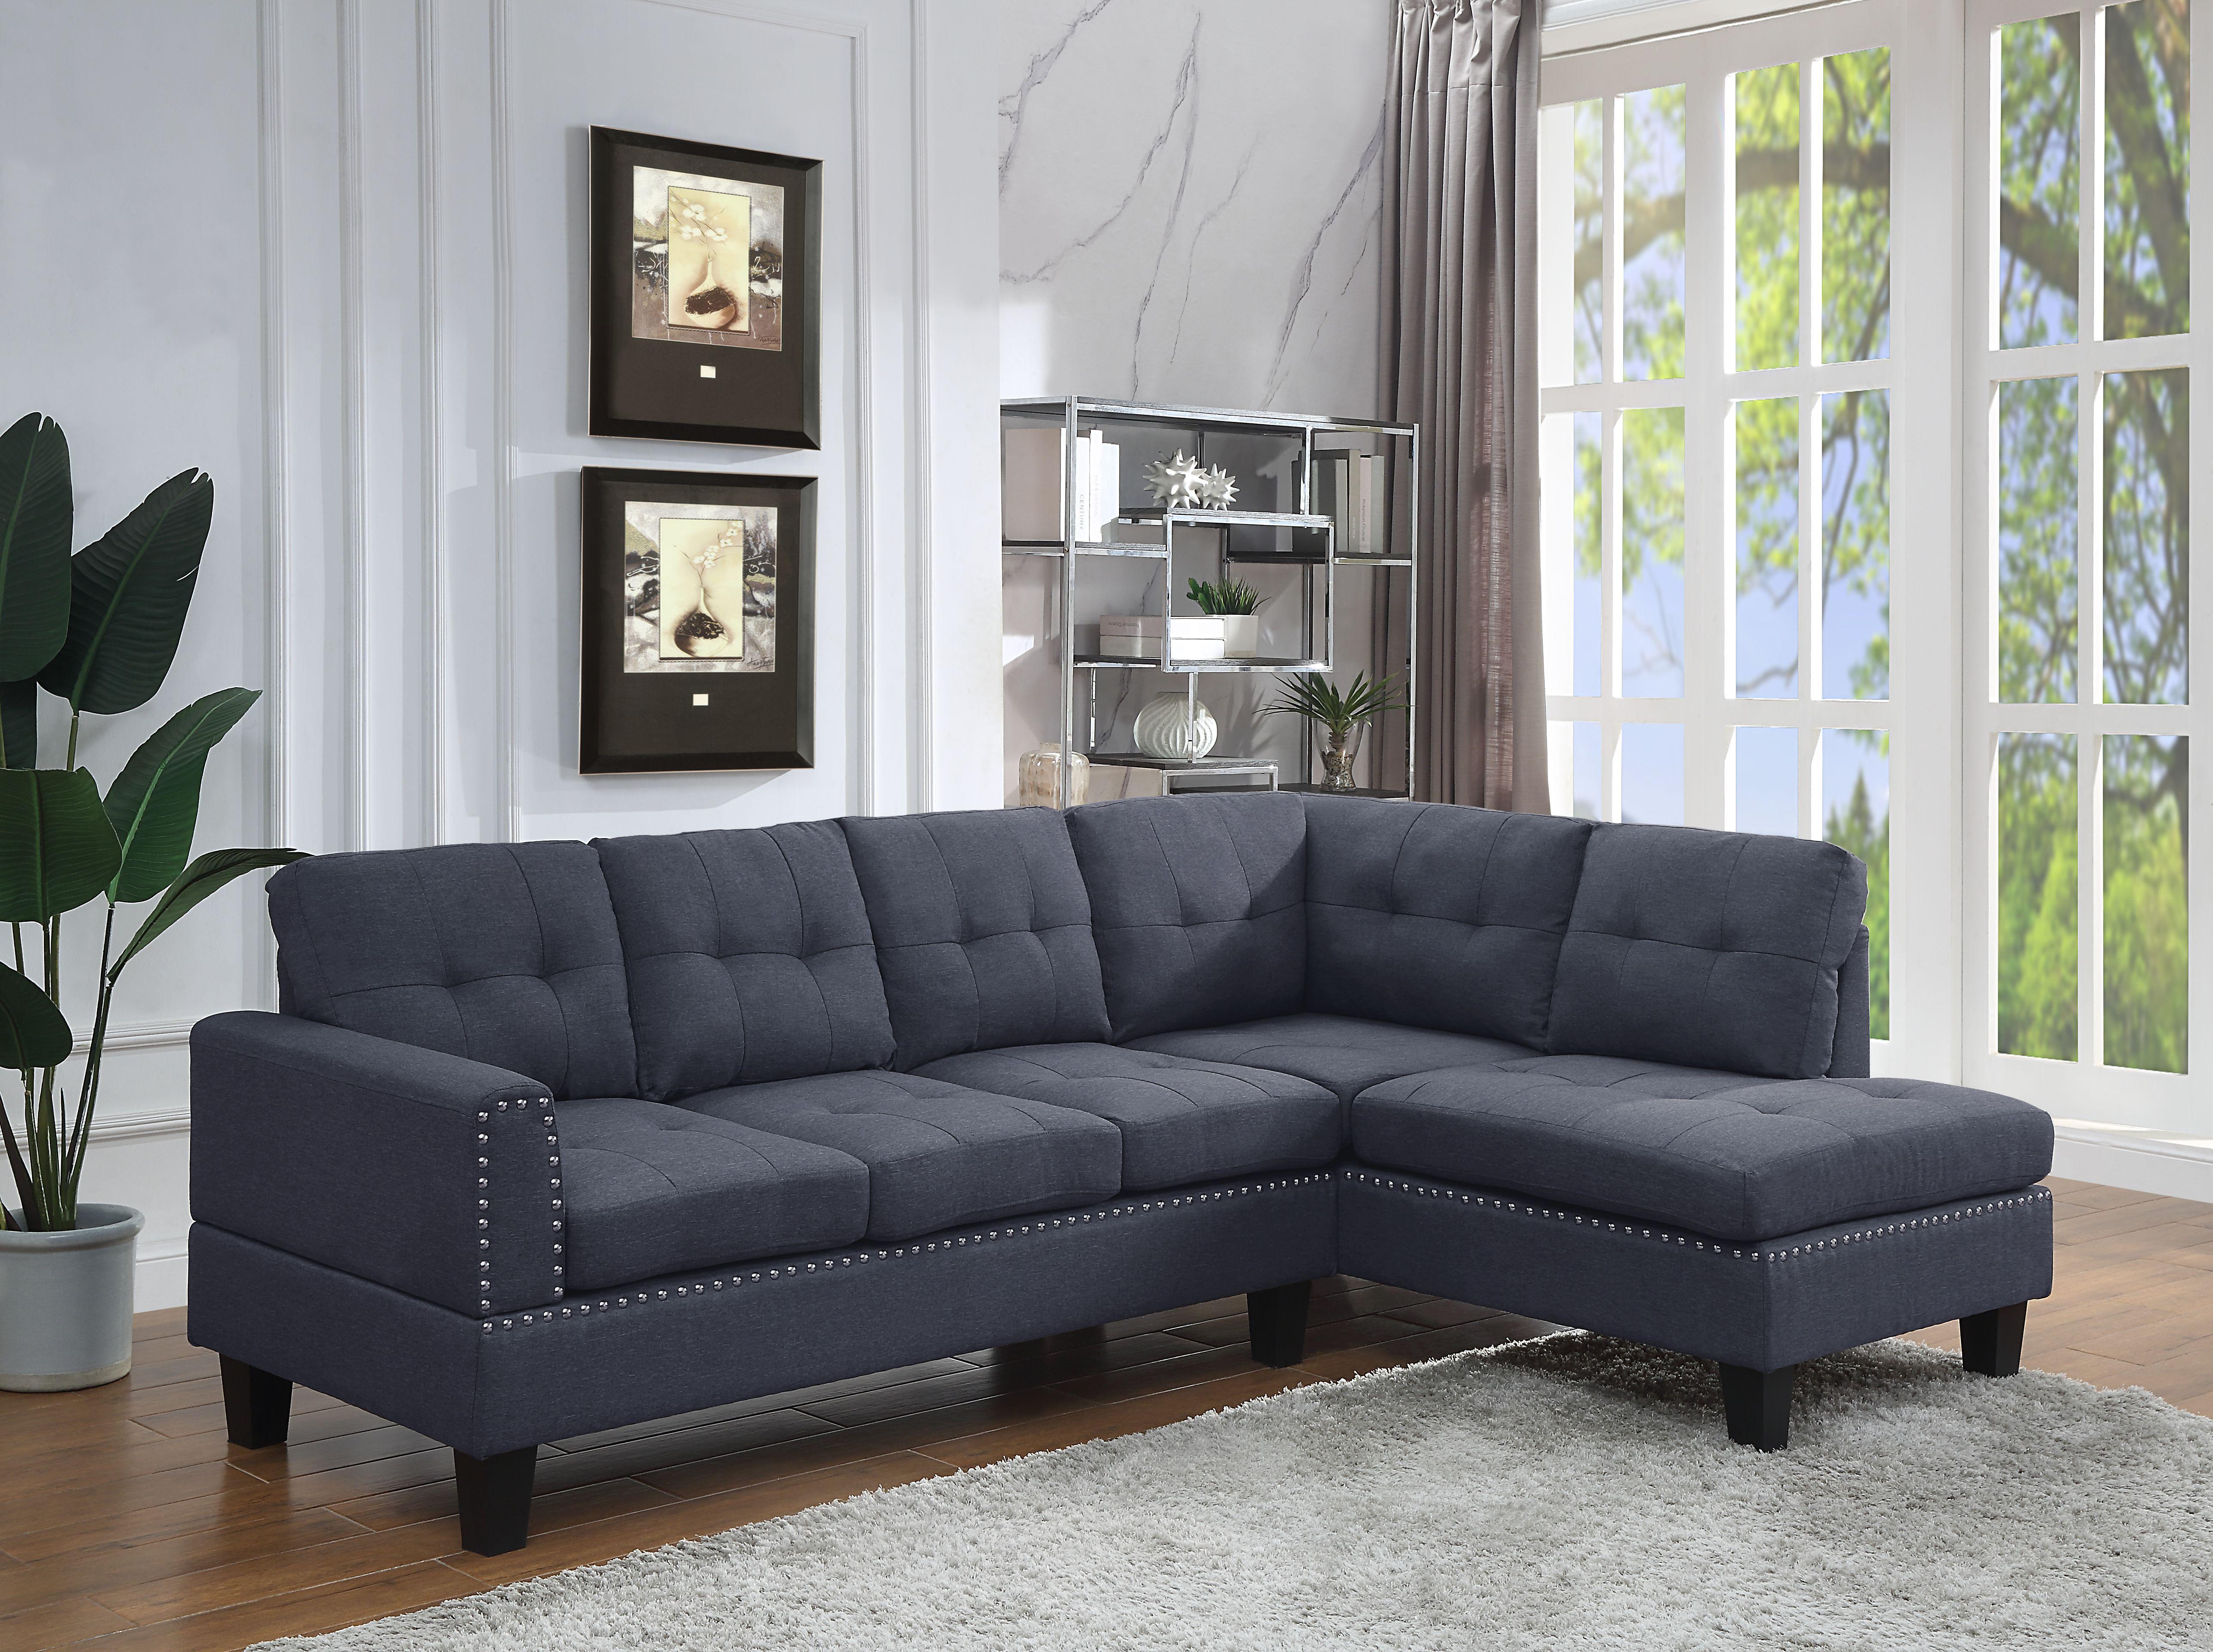 Modern, Classic Sectional Sofa Jeimmur 56475-3pcs in Gray Linen